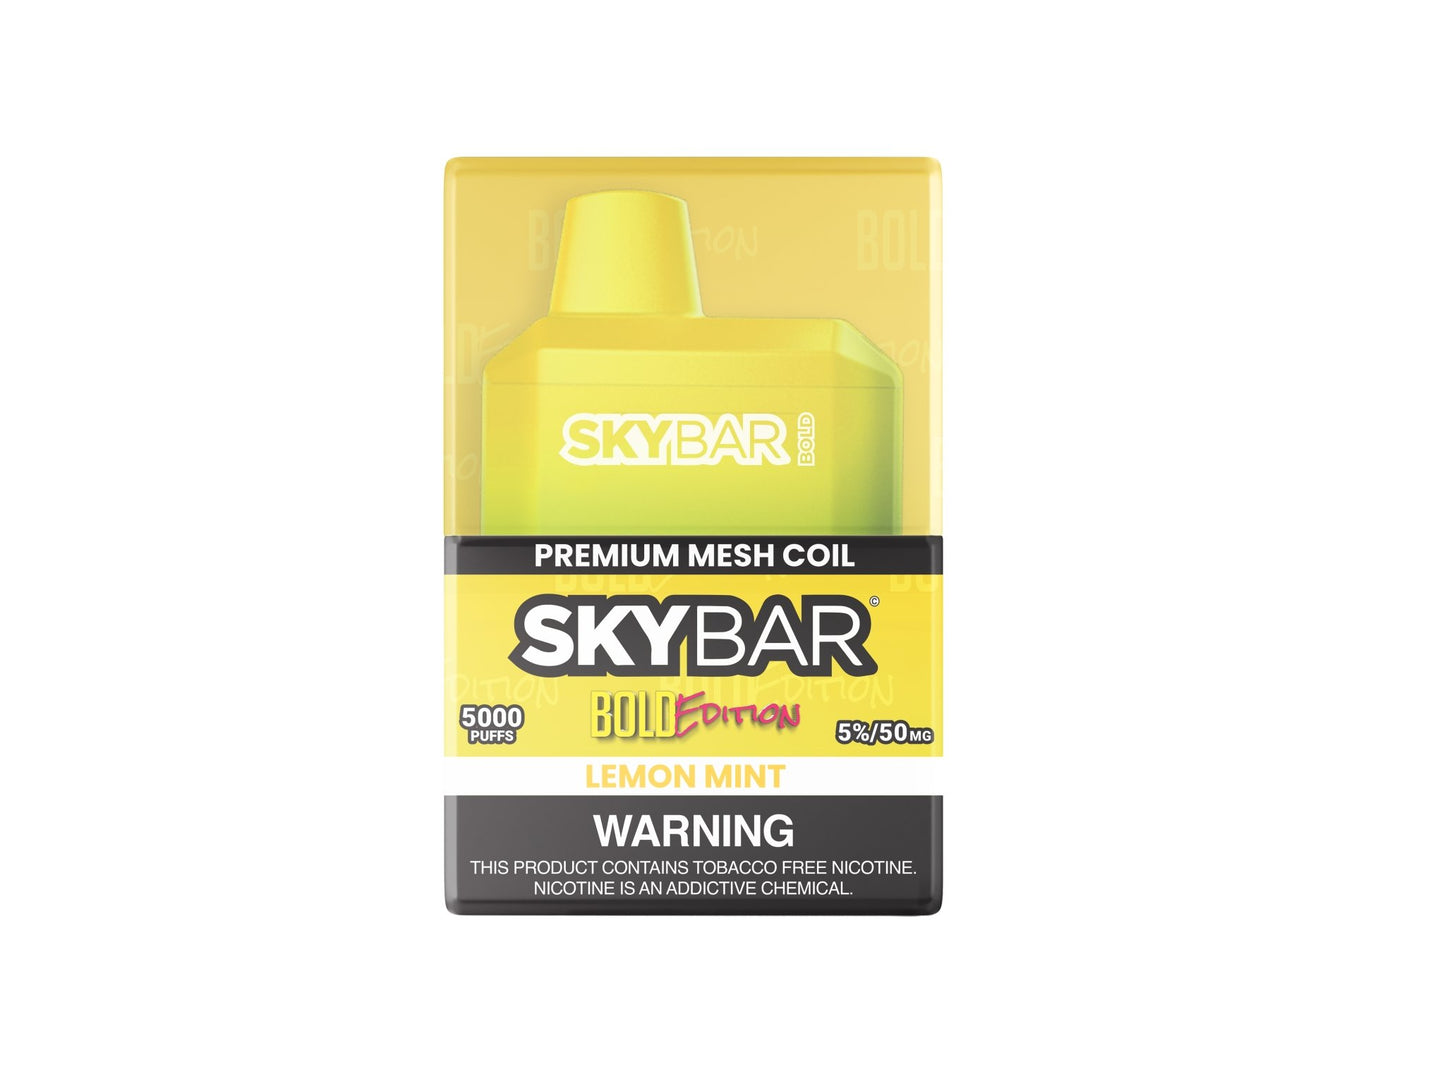 SKYBAR BOLD 5000 PUFFS 5% Nic AVAILABLE NOW - Skybar